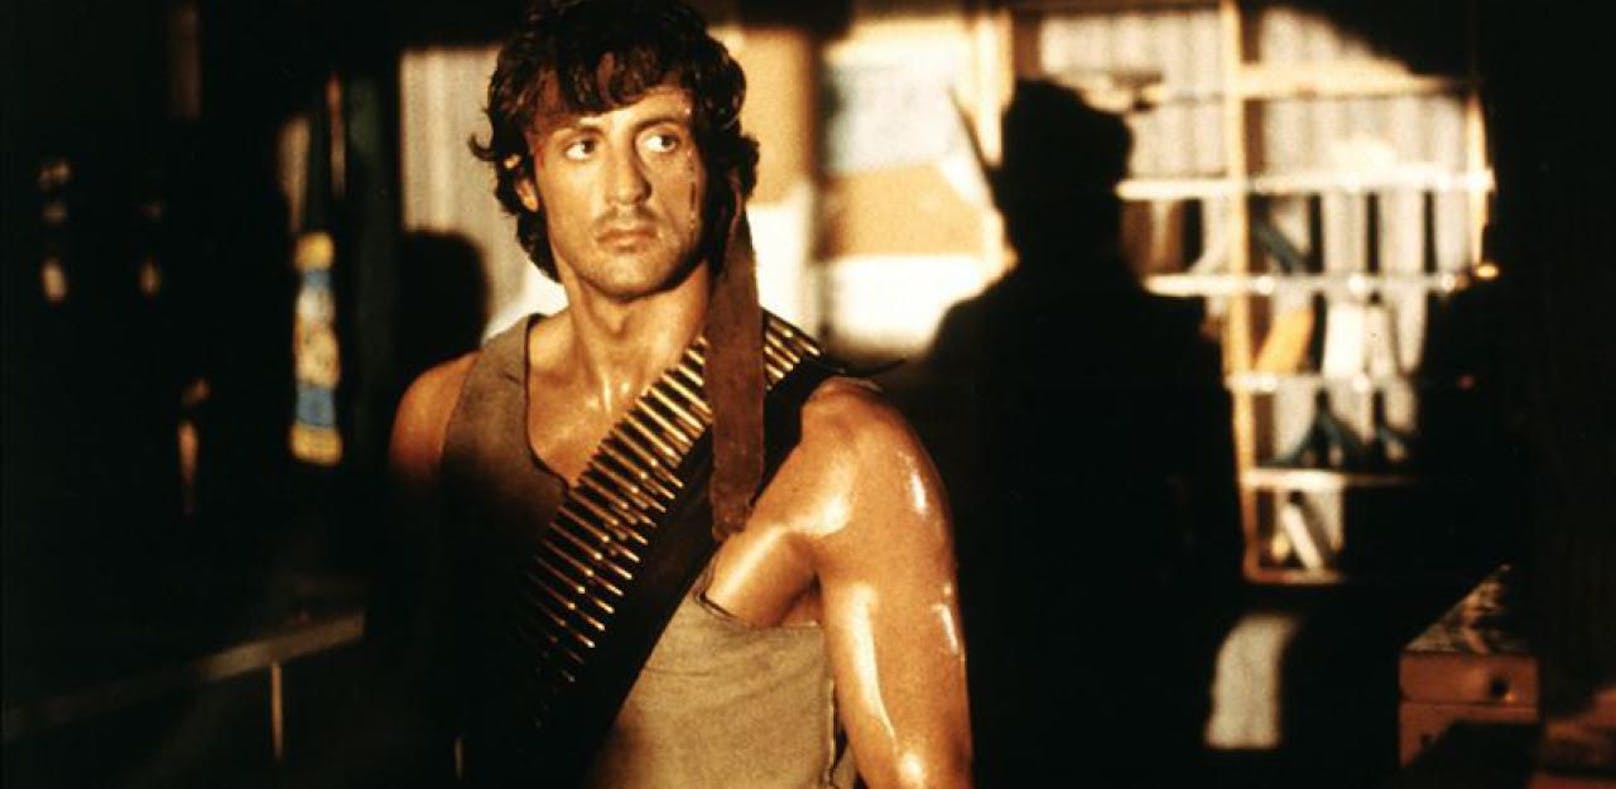 Indischer Filmemacher dreht "Rambo"-Remake